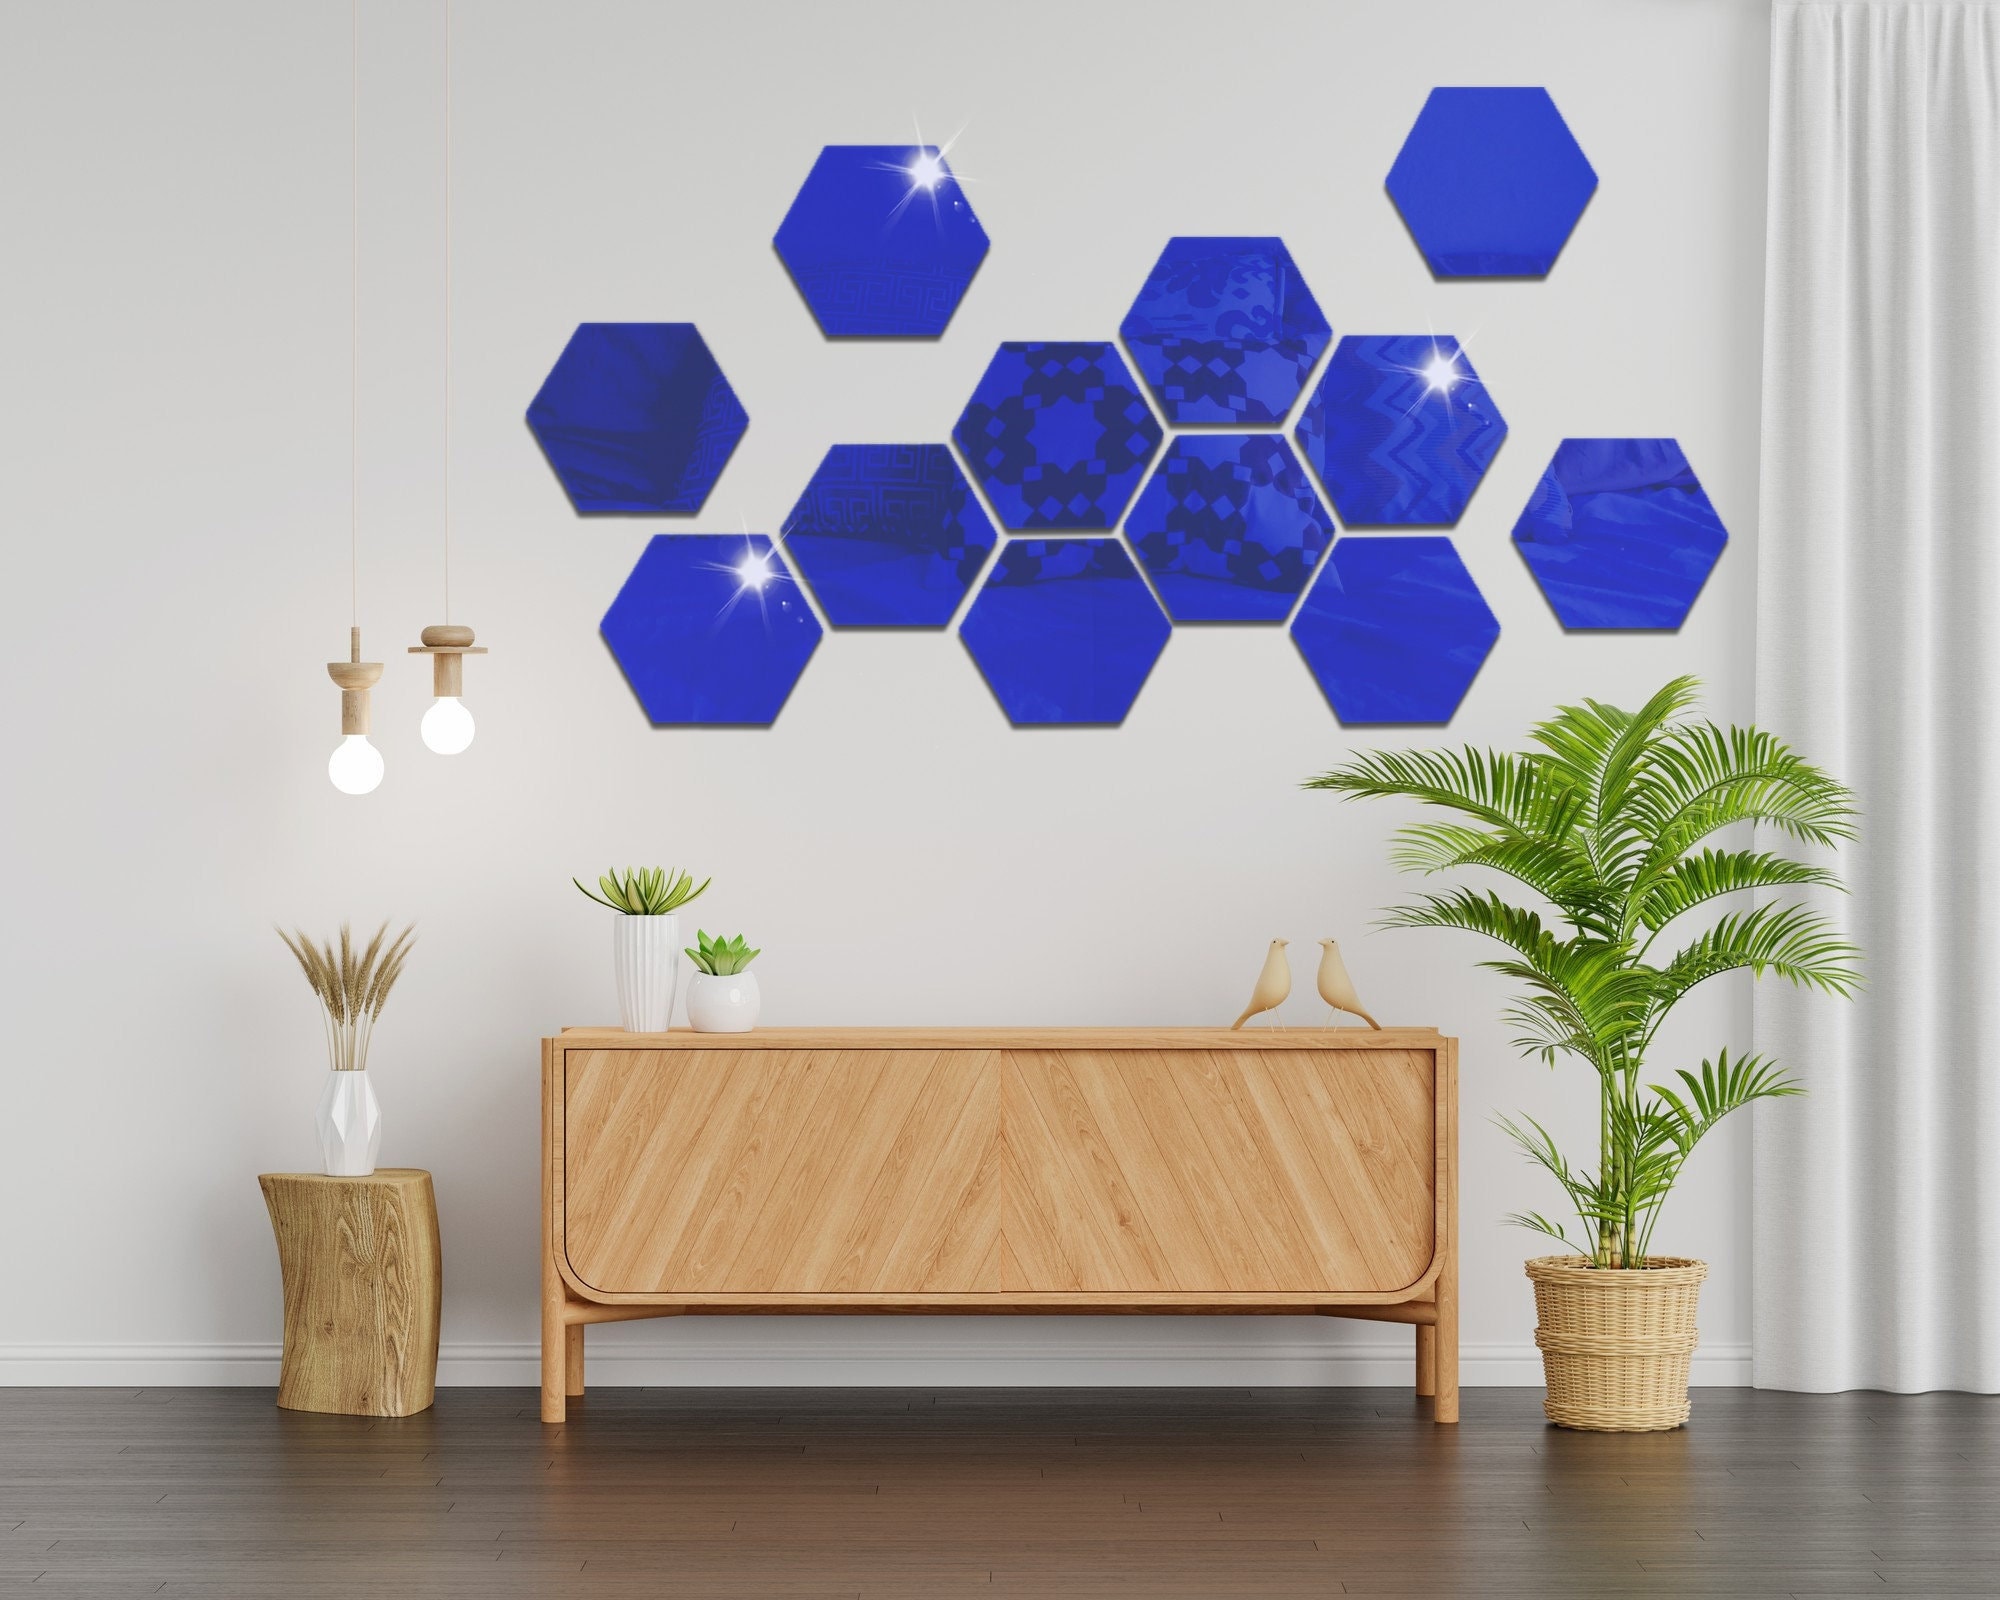 Hexagon Shape Mirror Wall Decal Wall Sticker 3pcs 